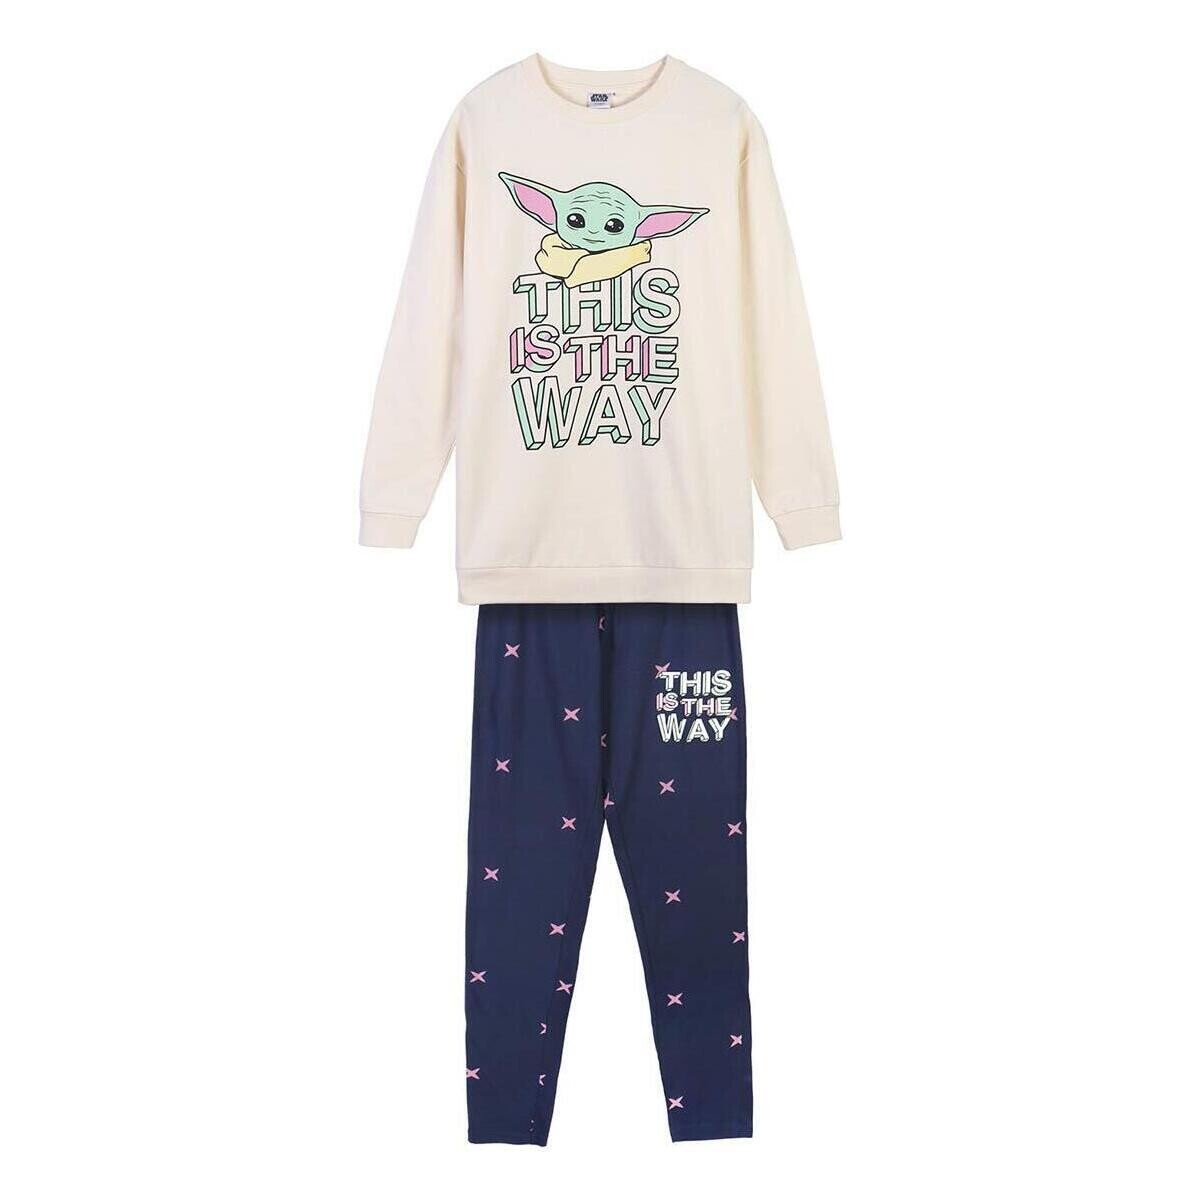 Textil Mulher Pijamas / Camisas de dormir Disney 2900000347 Azul